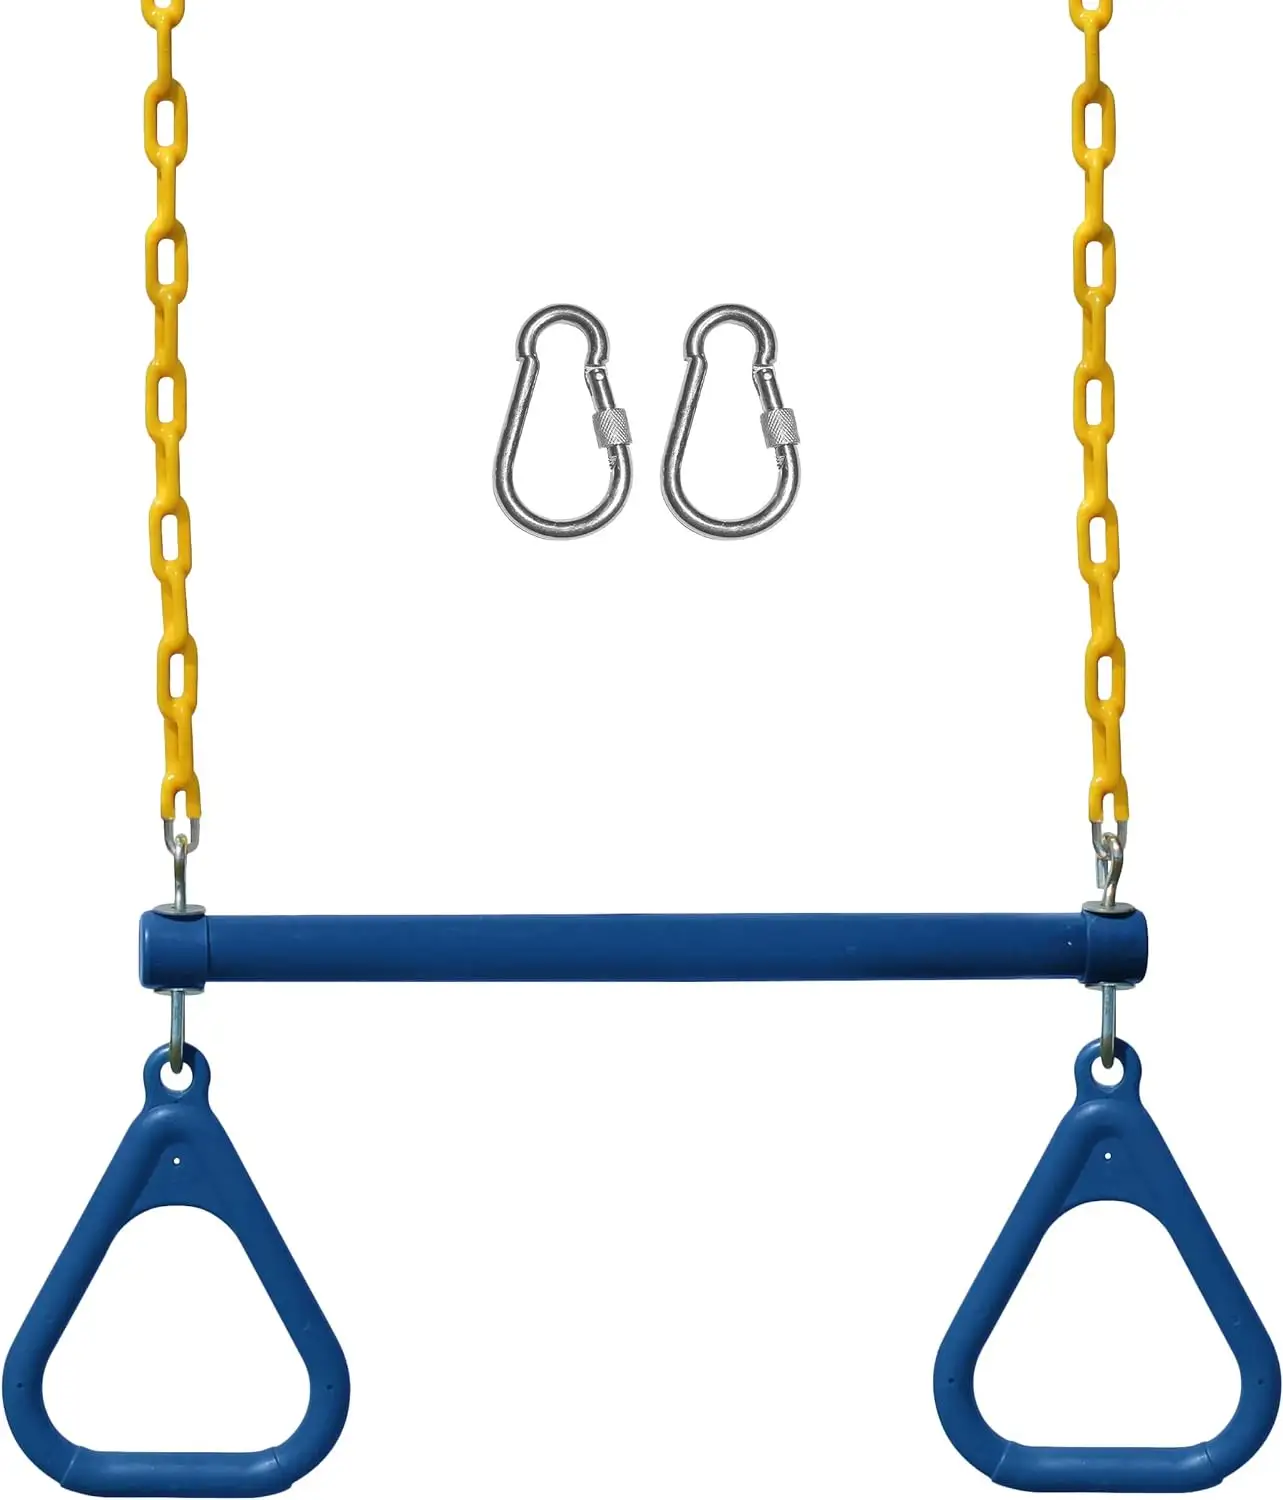 Outdoor Amusement Kindergarten Play Equipment Heavy Duty Chain Gym Swing Set